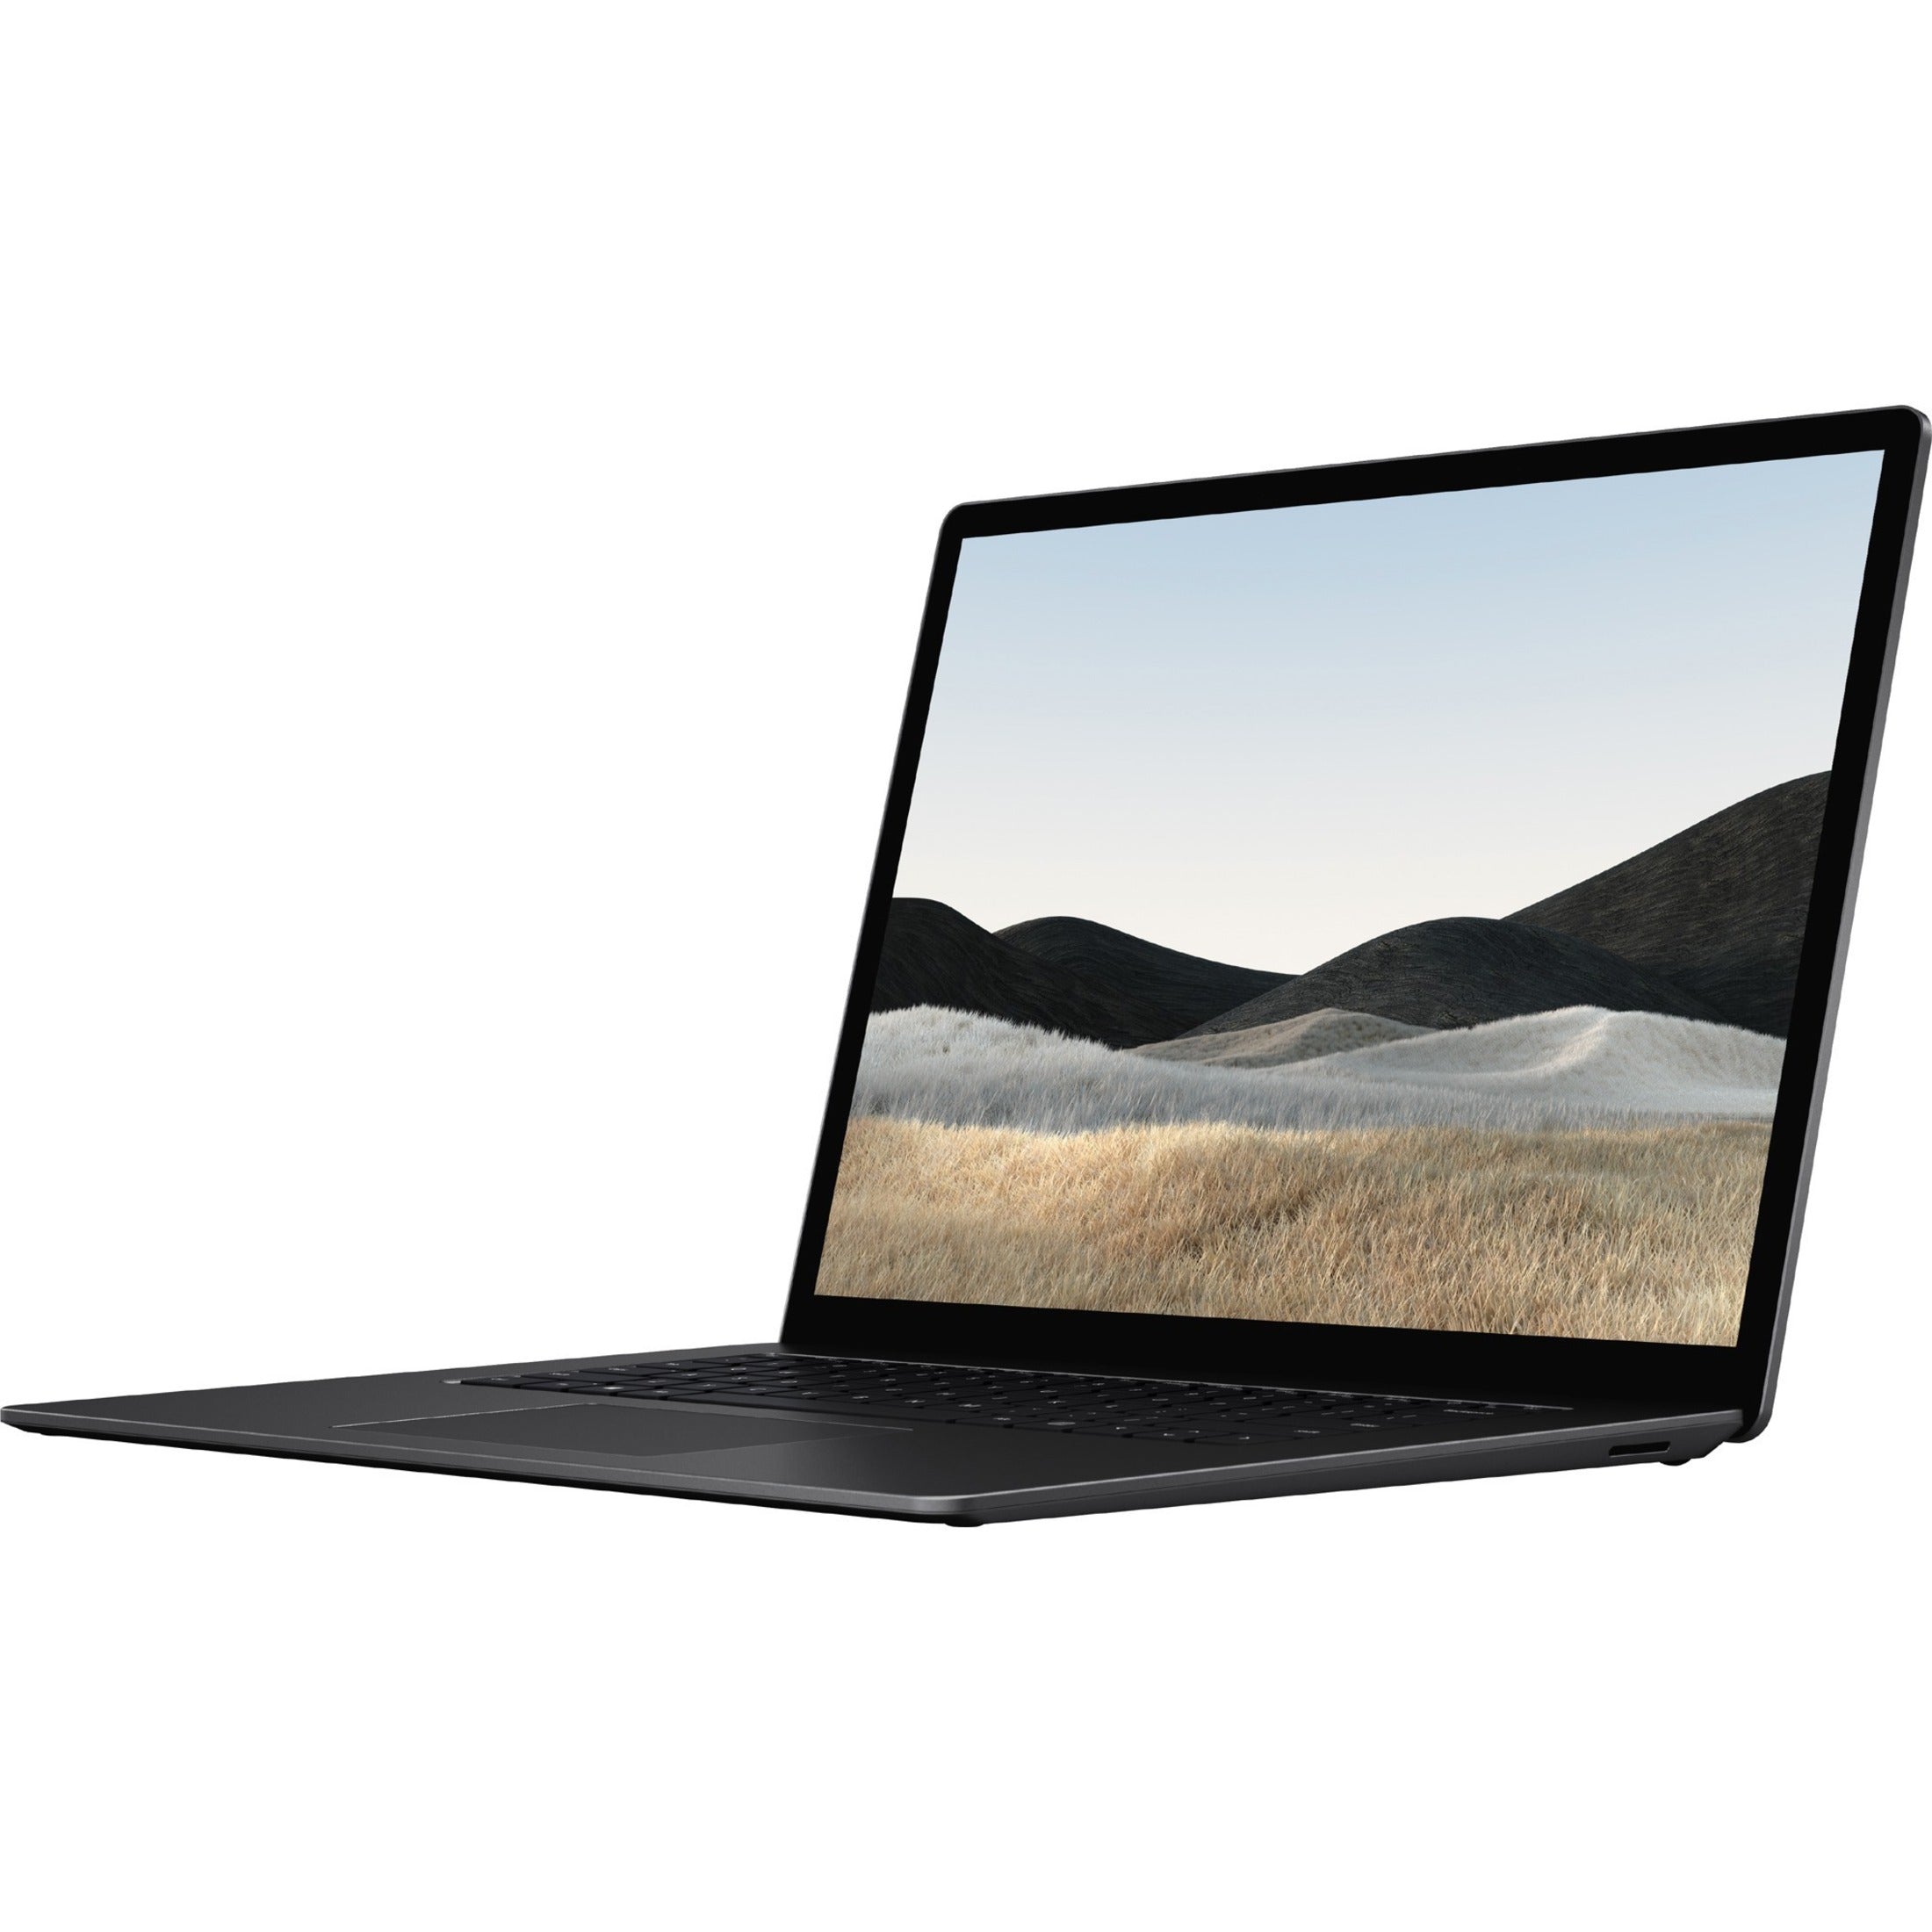 Microsoft 5L1-00001 Surface Laptop 4 Notebook, 15 Touchscreen, Core i7, 8GB RAM, 512GB SSD, Windows 10 Pro